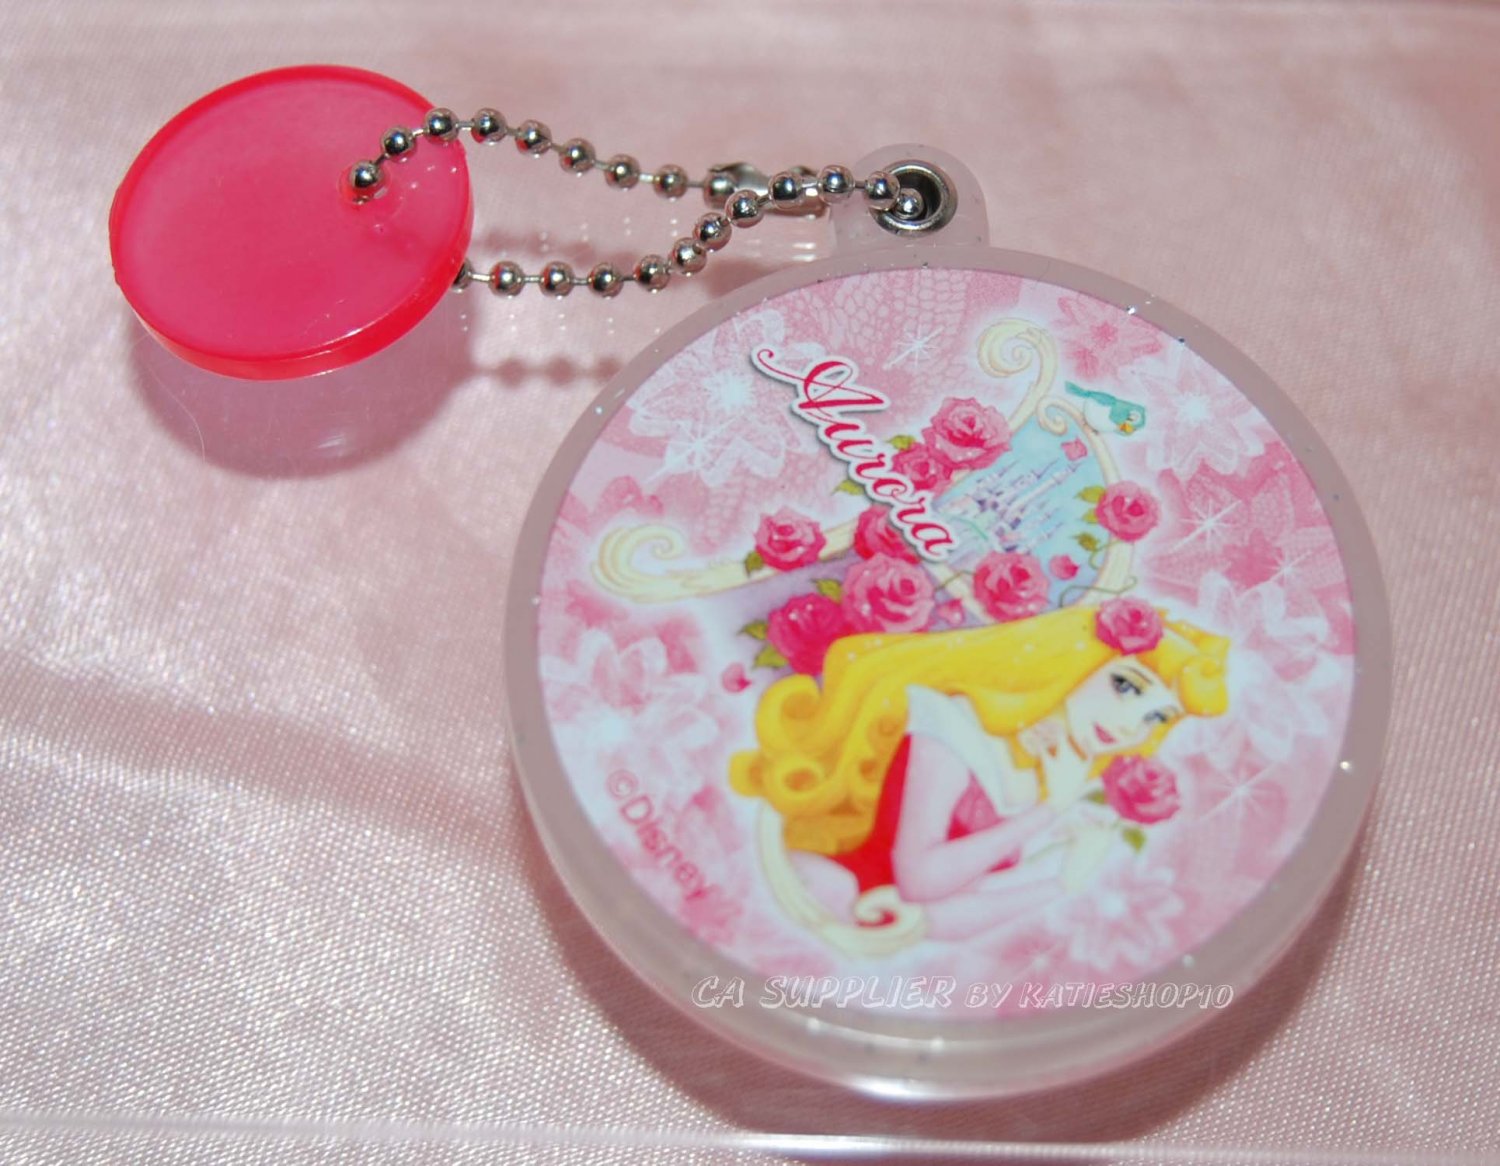 Yujin Disney Princess AURORA Round Mirror Key Chain Gashapon Capsule Toy 2" dia